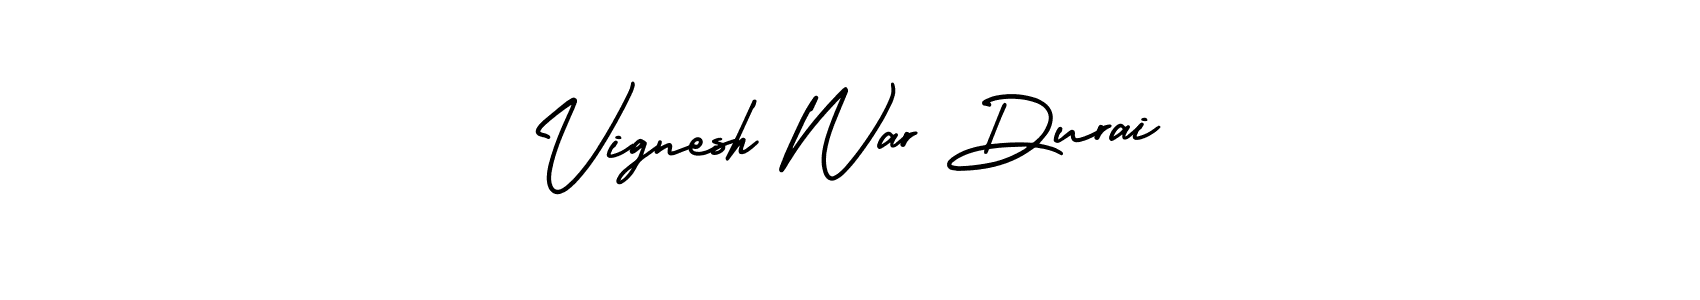 How to Draw Vignesh War Durai signature style? AmerikaSignatureDemo-Regular is a latest design signature styles for name Vignesh War Durai. Vignesh War Durai signature style 3 images and pictures png